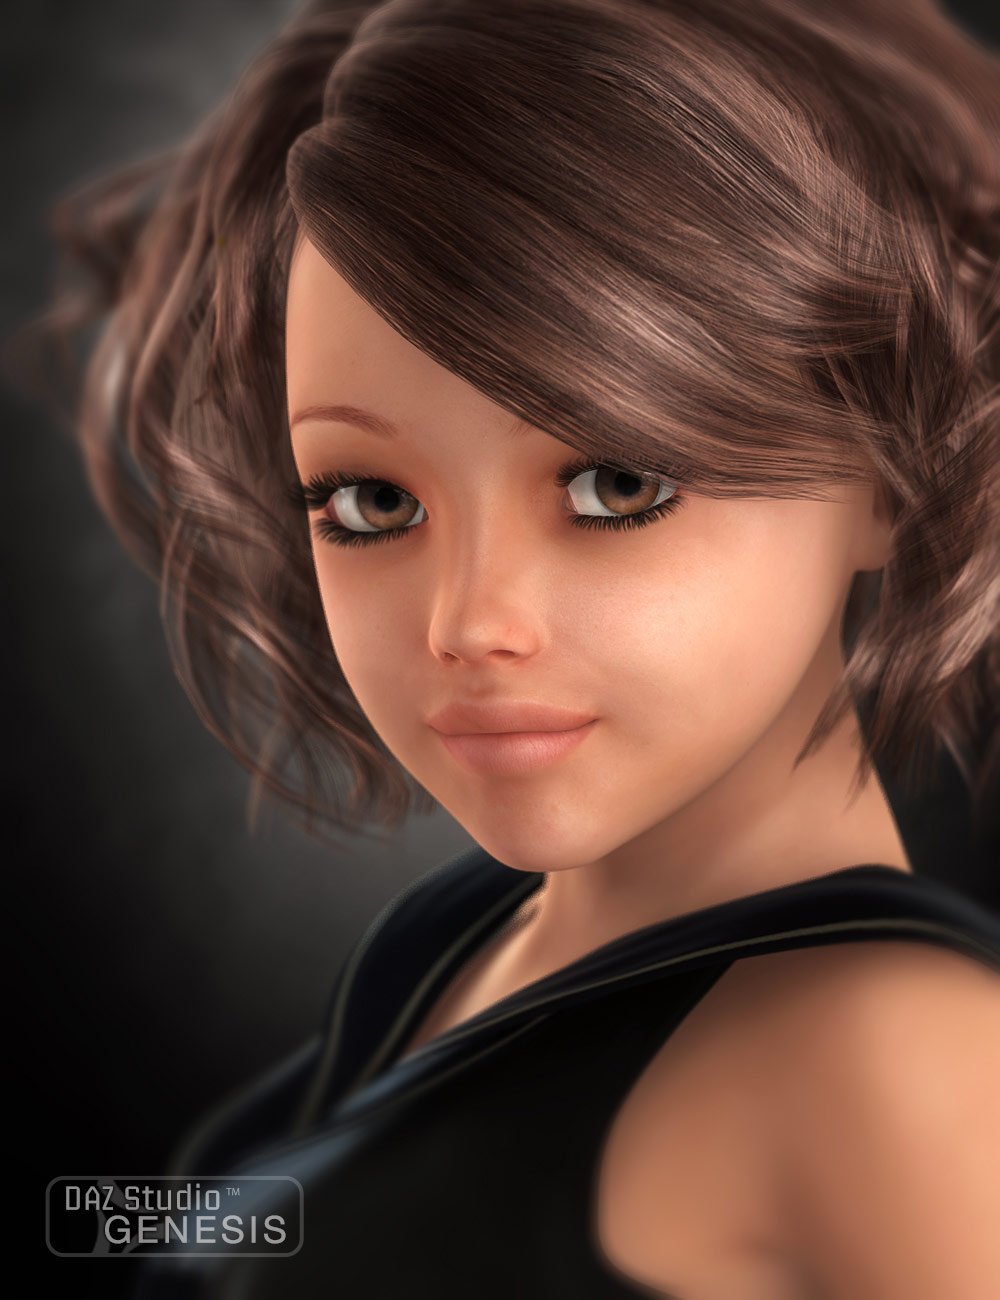 Young Teens 5 Julie by: ElliandraHandspan StudiosThorne, 3D Models by Daz 3D